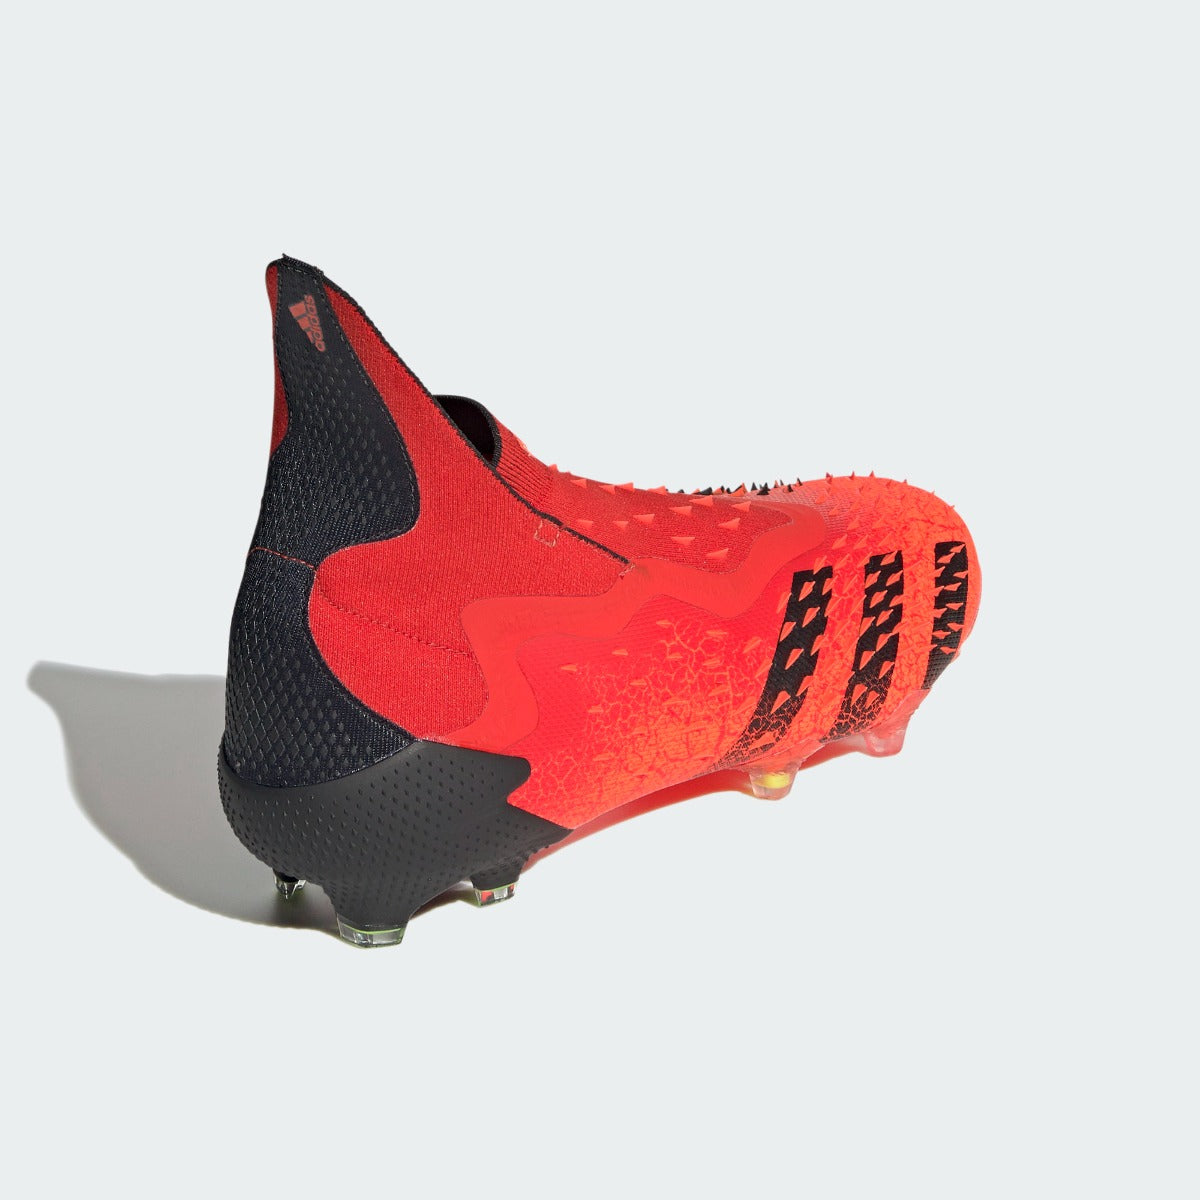 Adidas Predator Freak + FG - Red-Black (Diagonal 2)